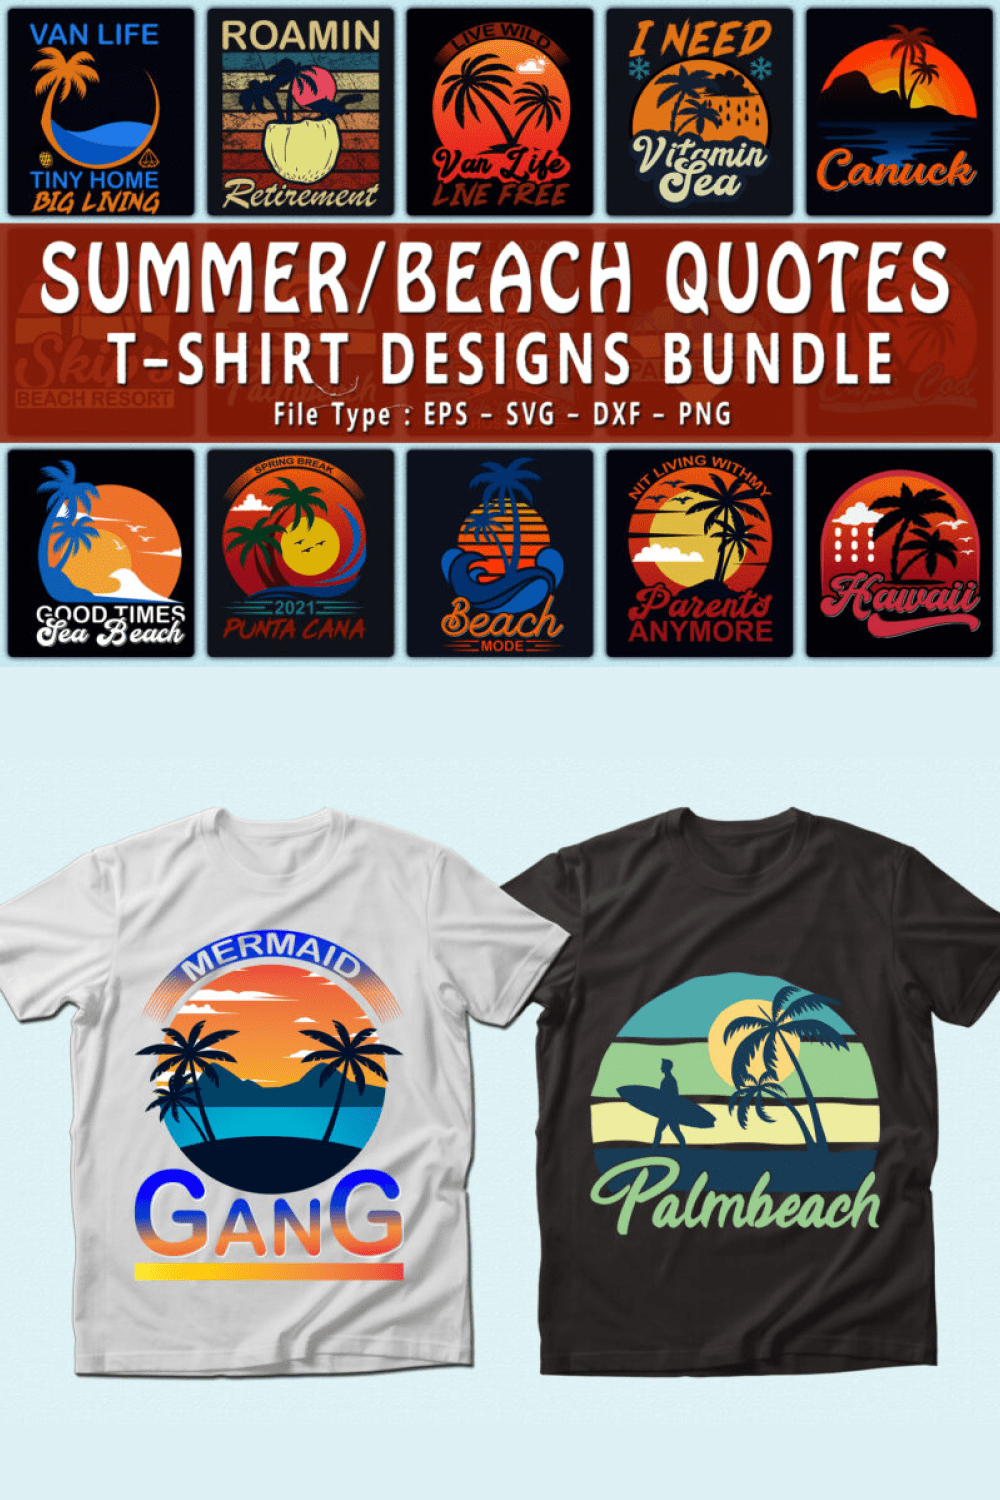 Trendy 20 Beach & Summer Quotes T-shirt Designs Bundle - MasterBundles - Pinterest Collage Image.